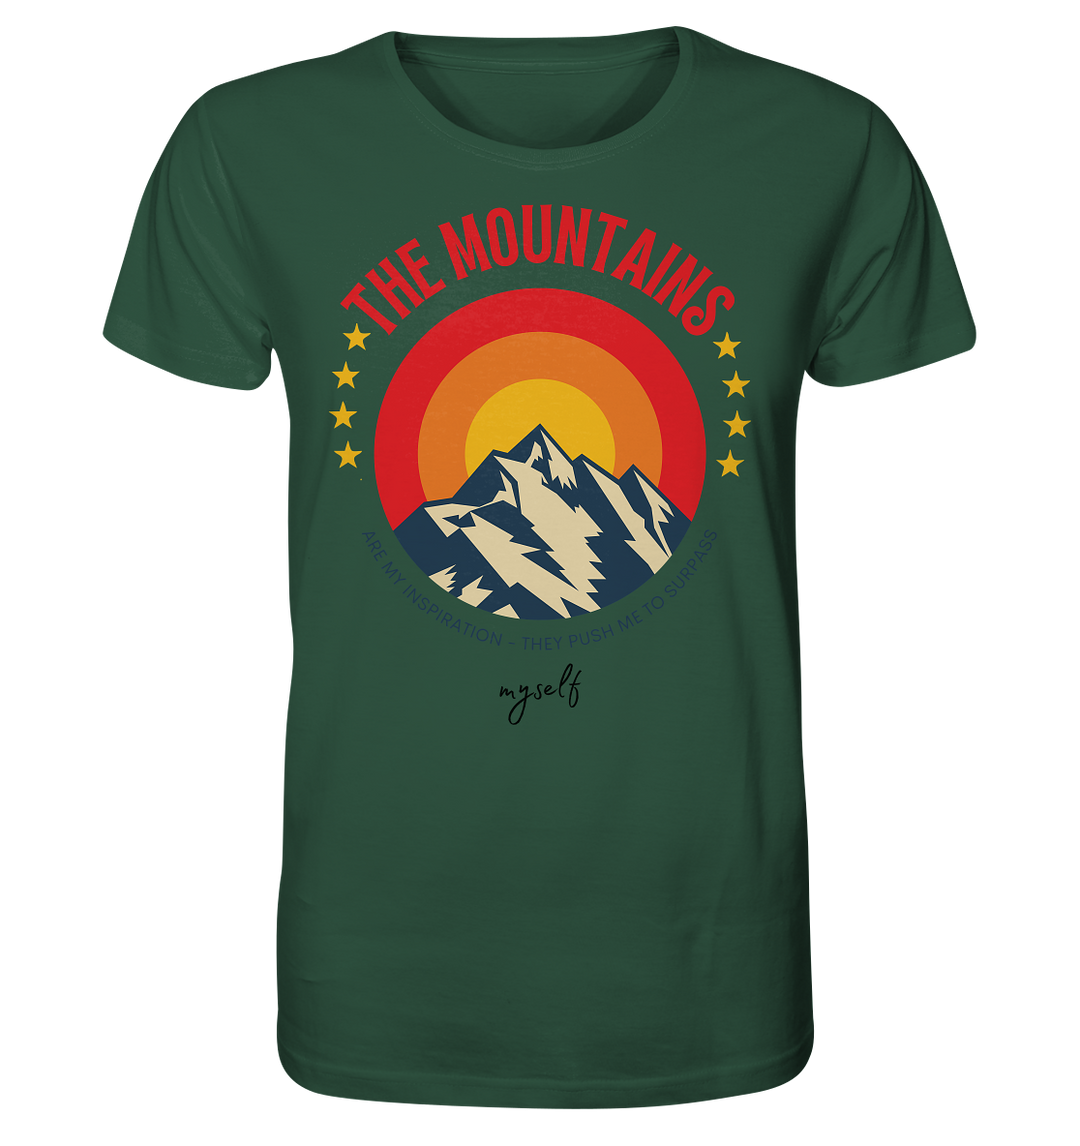 Atme die Berge - Organic Shirt